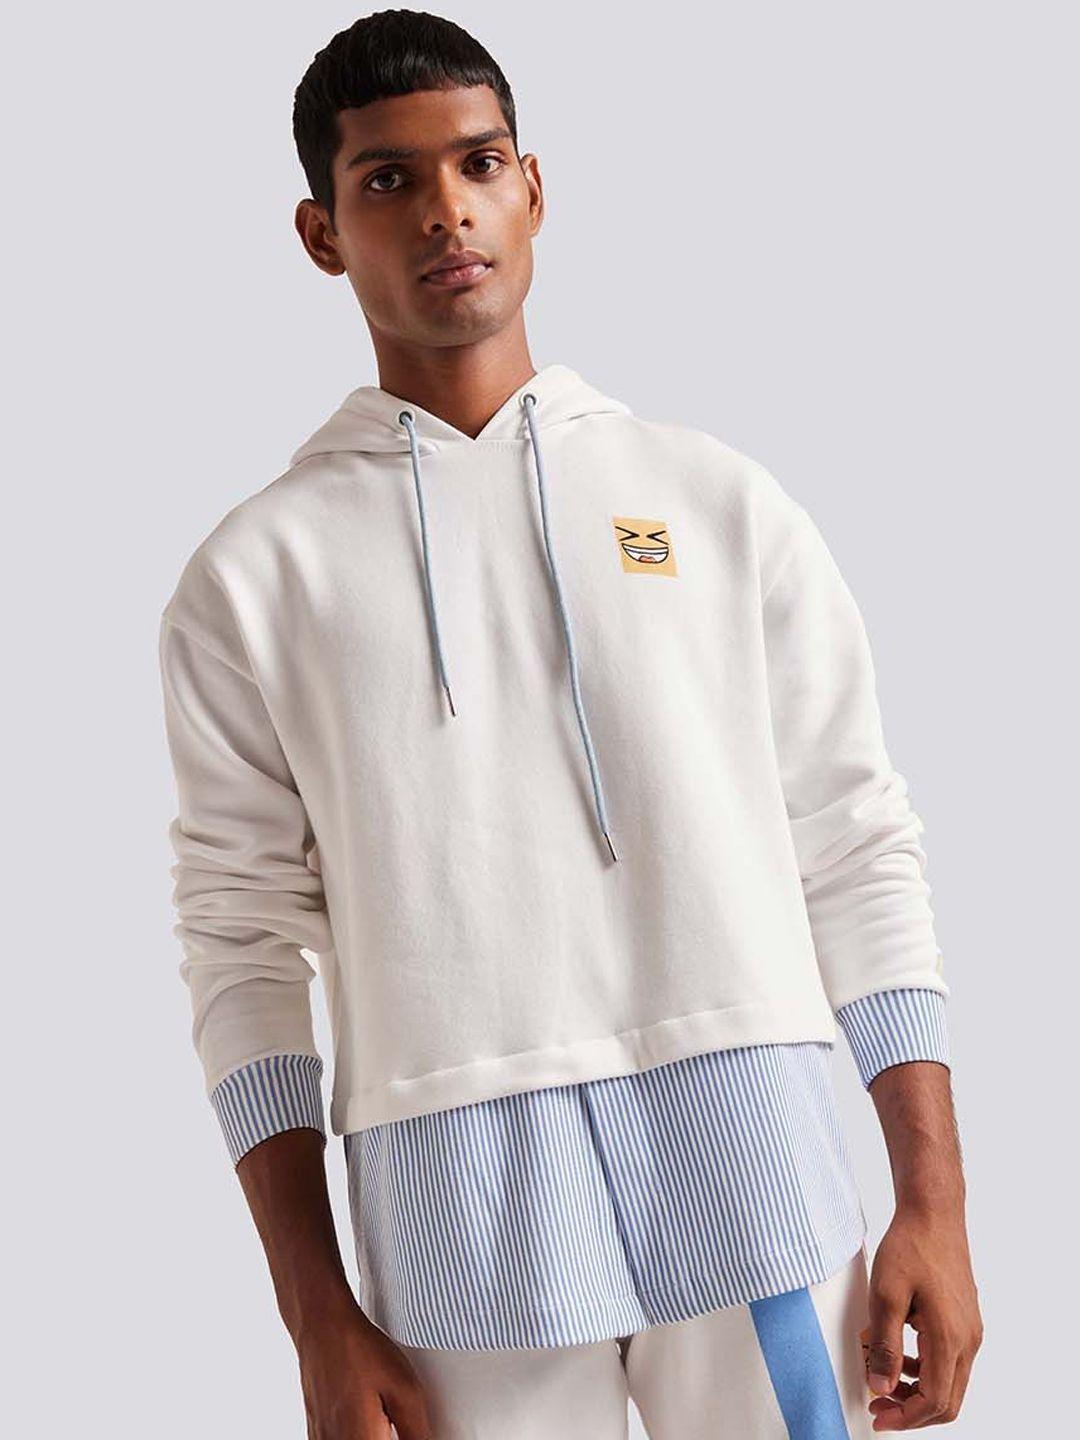 muvazo printed hooded pullover sweatshirt